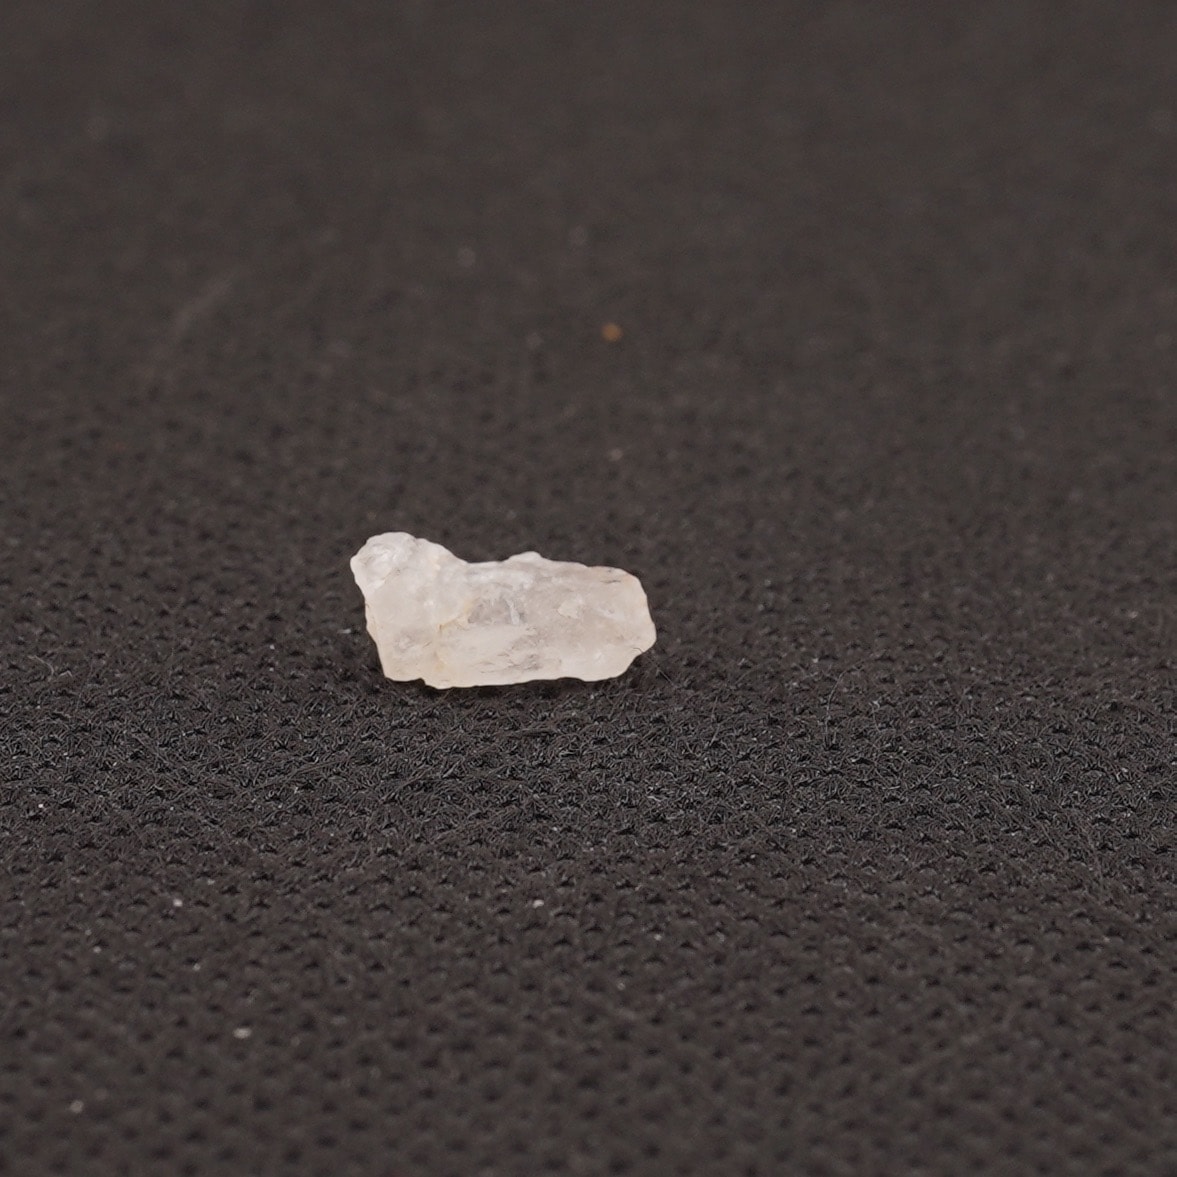 Fenacit nigerian cristal natural unicat f205